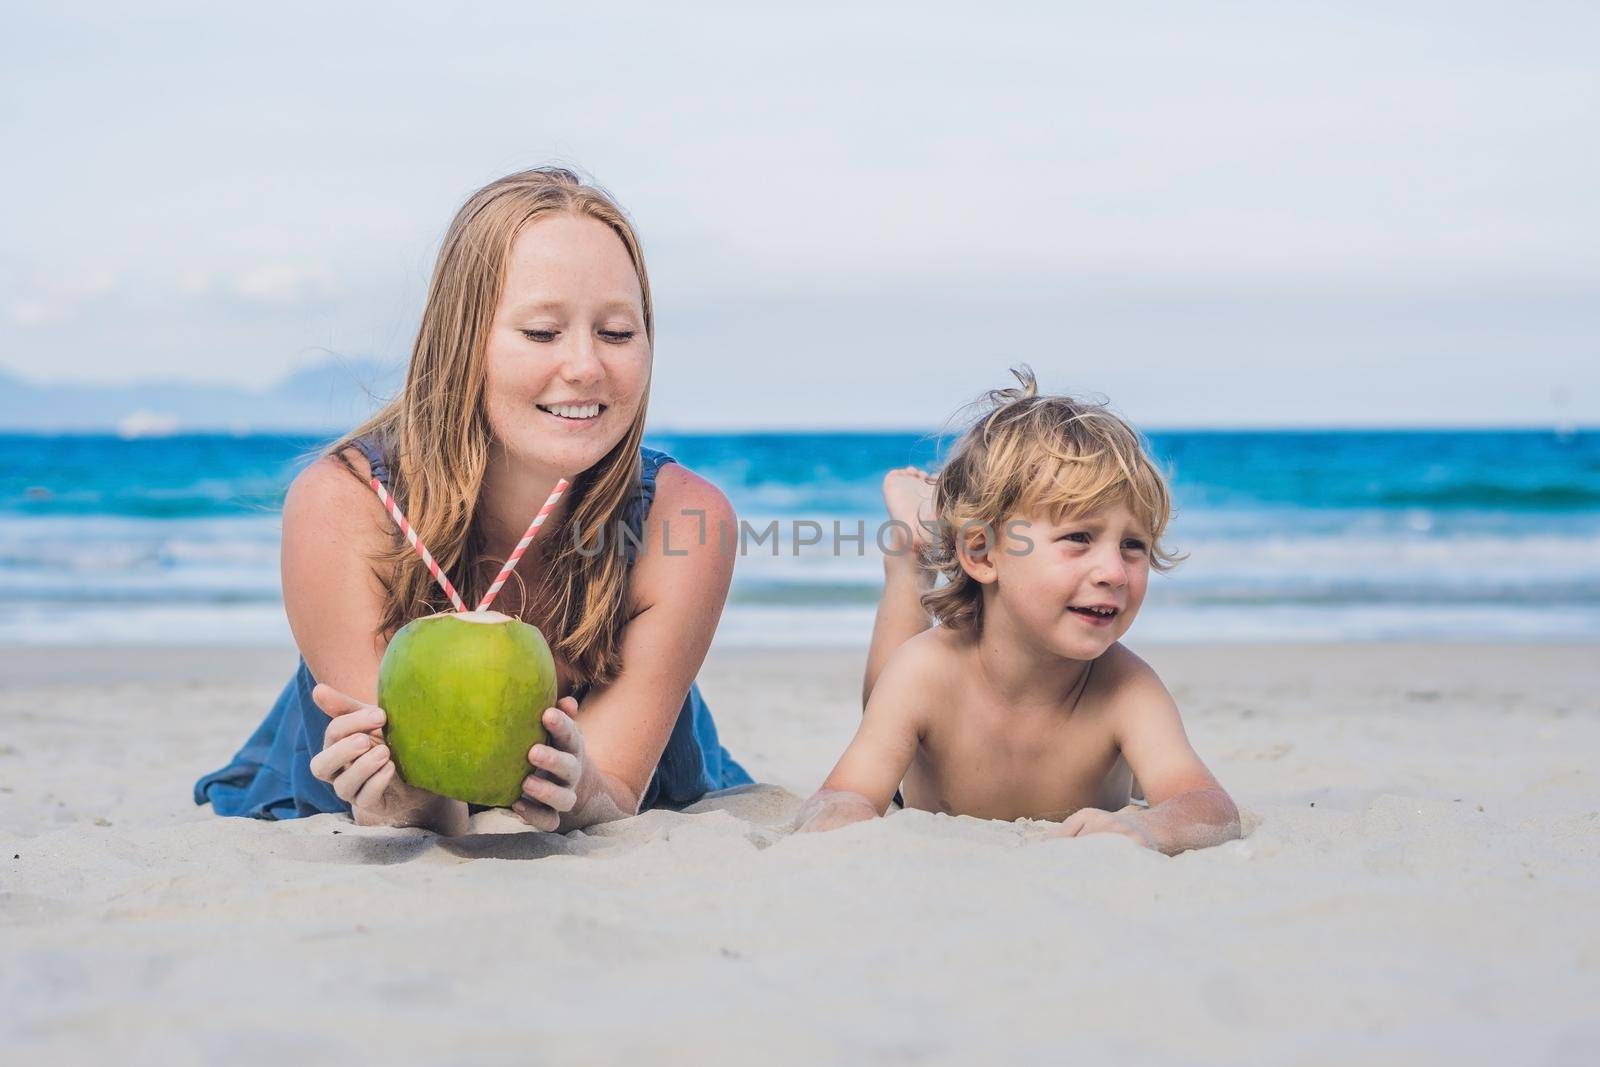 Mom and son enjoy the beach and drink coconut by galitskaya